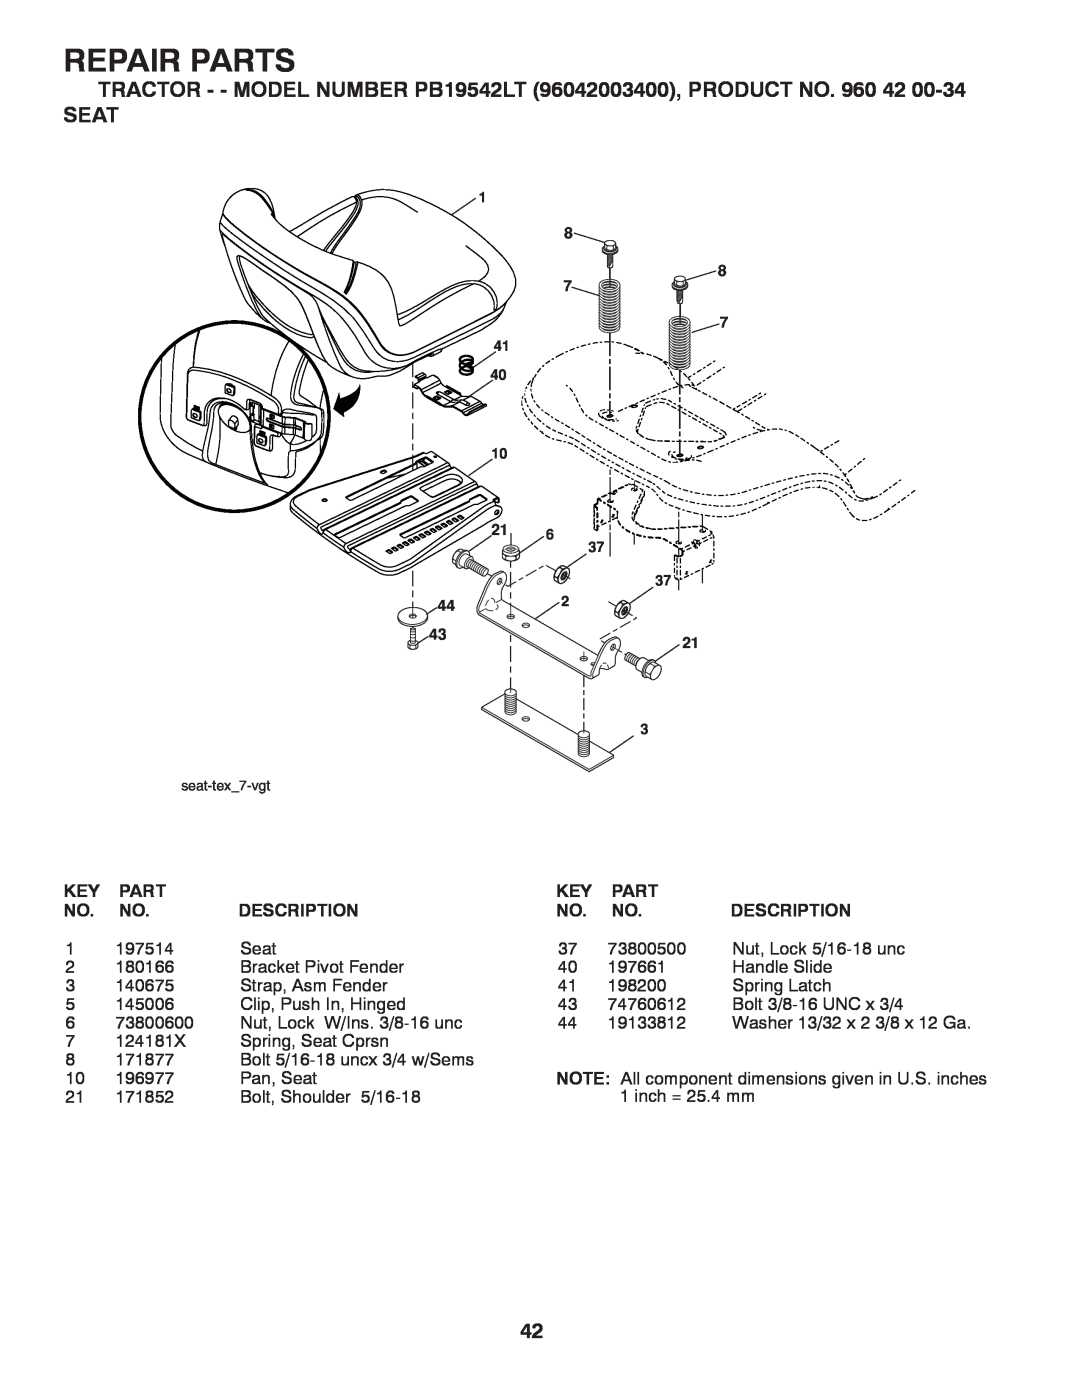 Poulan manual Seat, Repair Parts, TRACTOR - - MODEL NUMBER PB19542LT 96042003400, PRODUCT NO, Description 